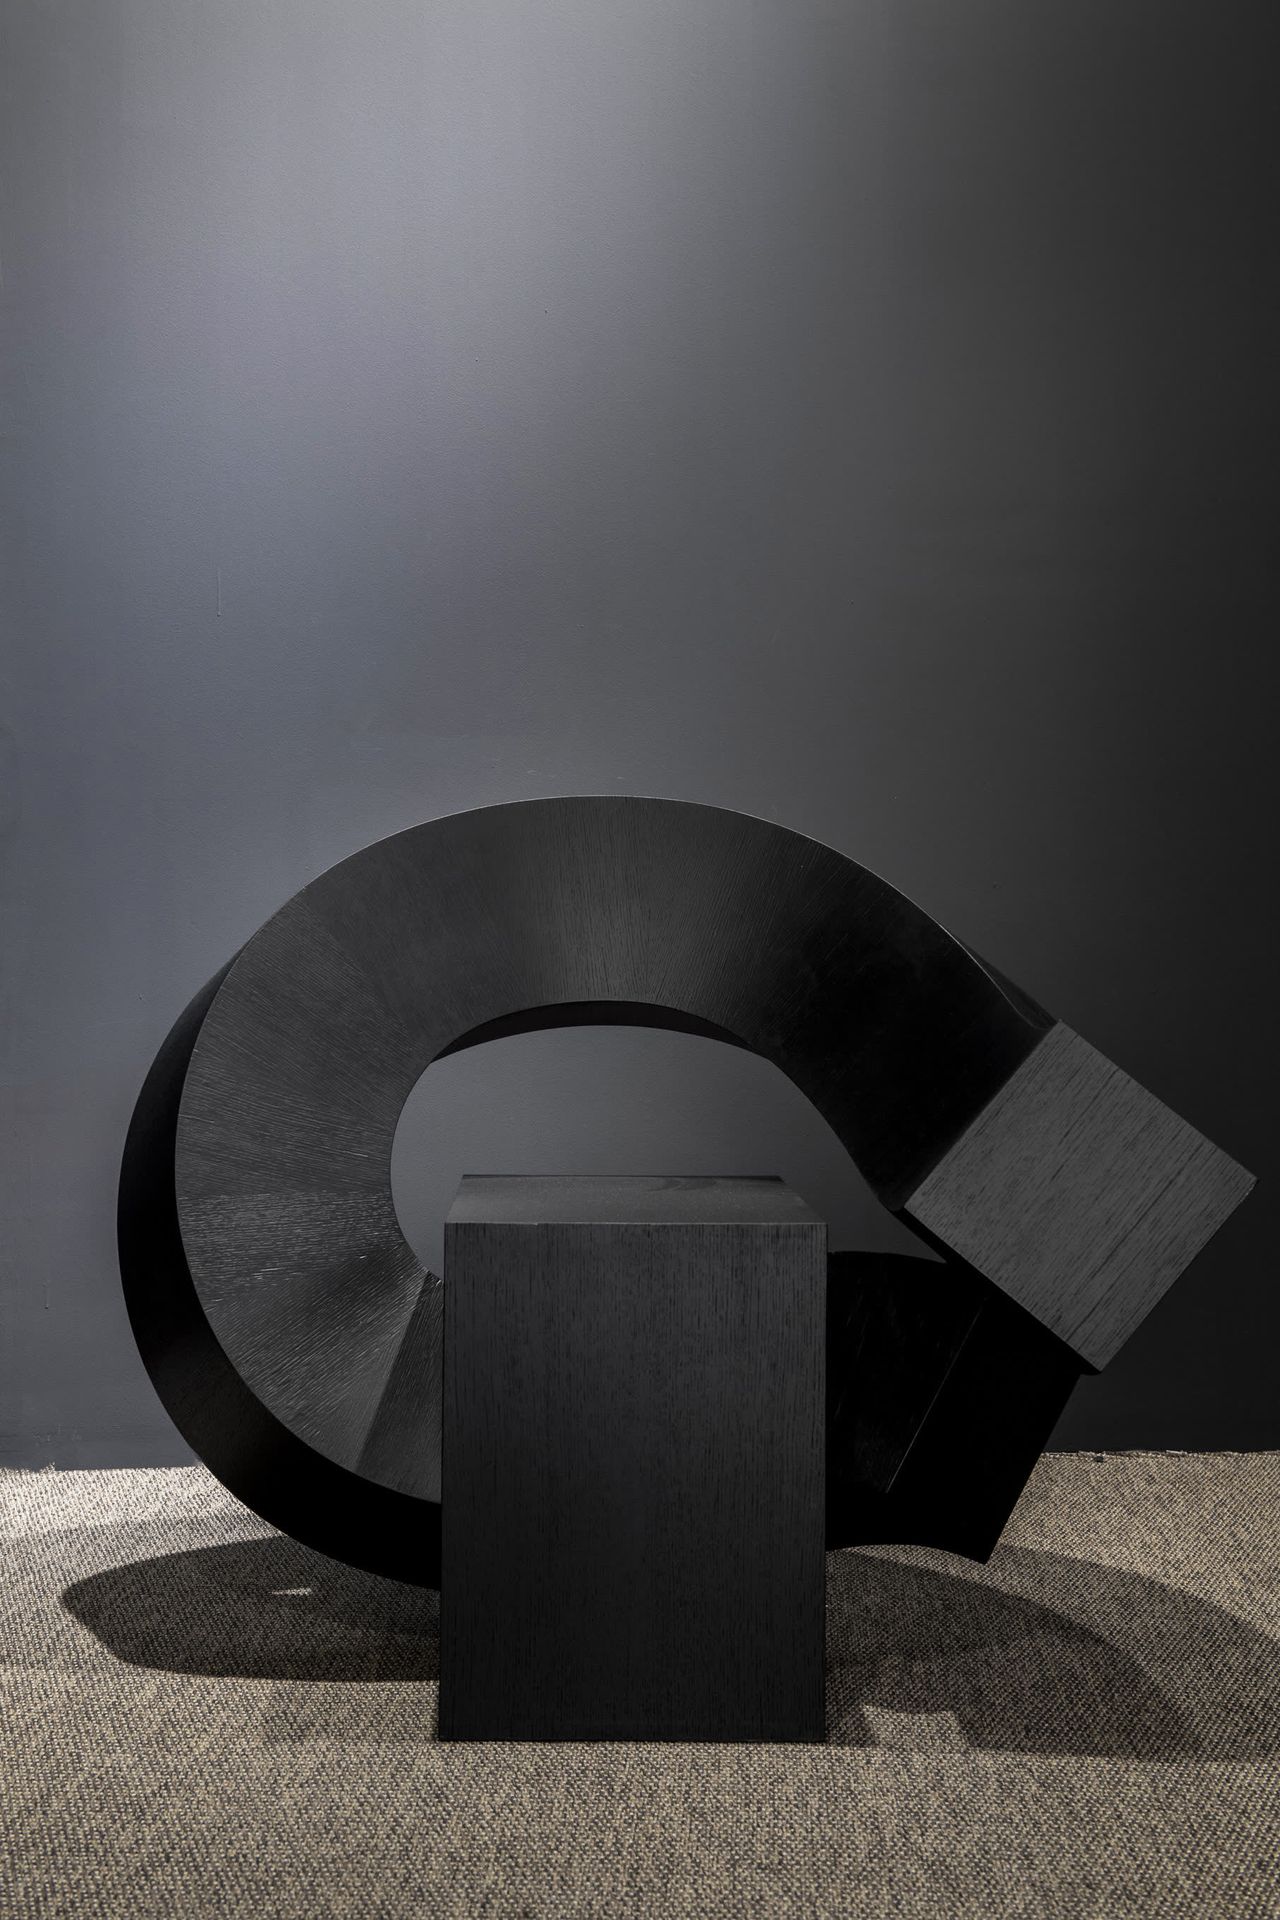 CHULAN KWAK 草书结构椅
黑色墨渍胶合板
2019
高70宽110深70厘米
出处：Iham画廊